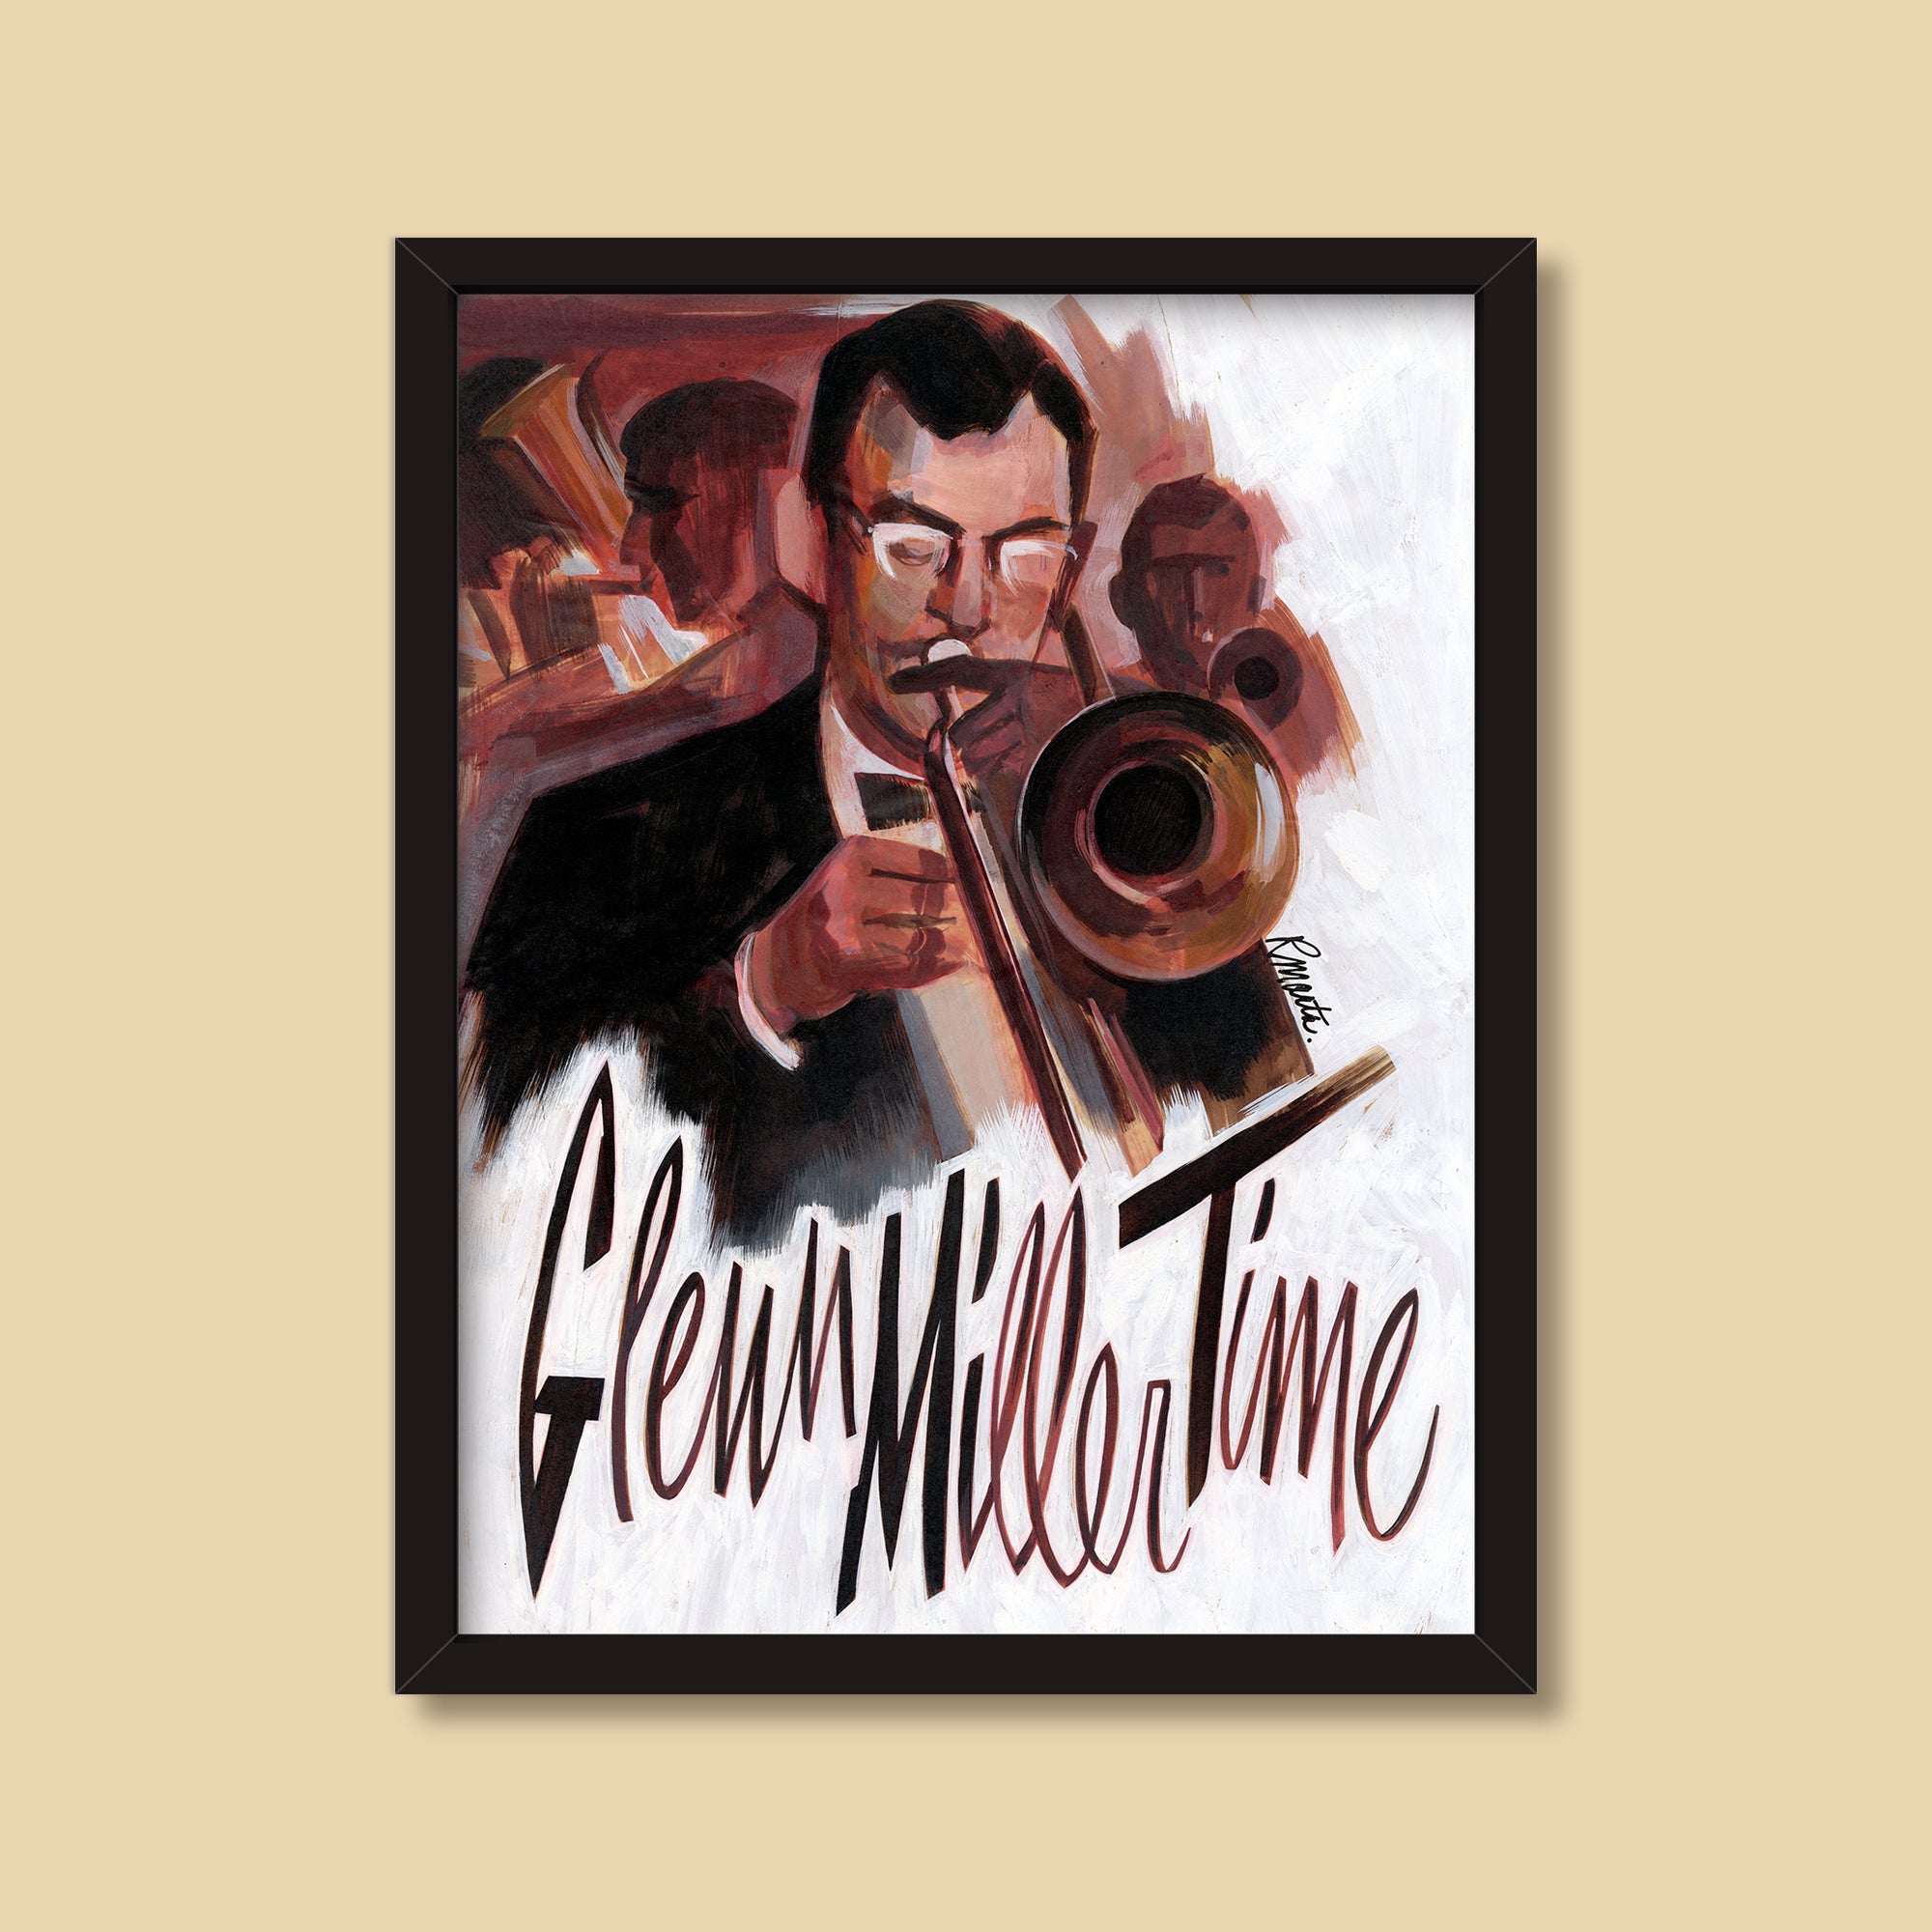 Glenn Miller Time — vintage illustration by Ray Marta